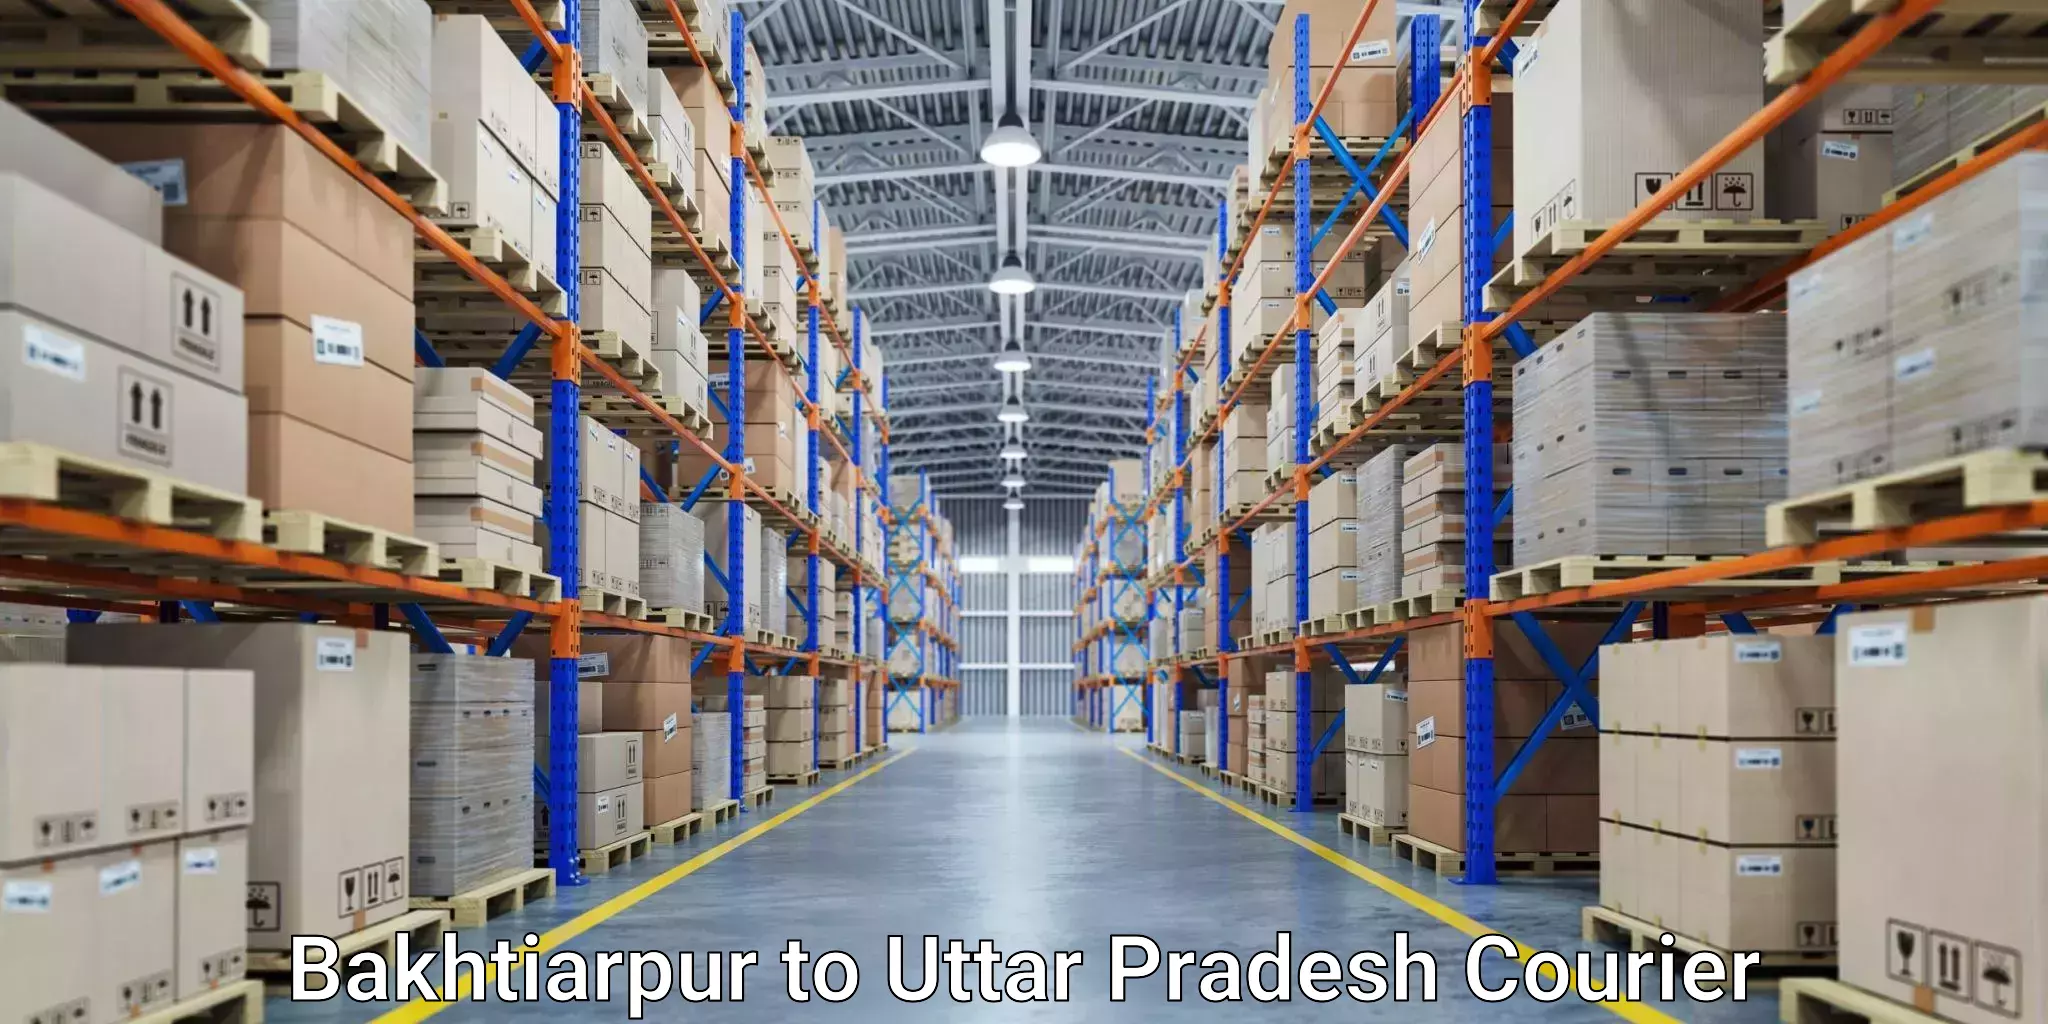 Reliable freight solutions Bakhtiarpur to Aligarh Muslim University